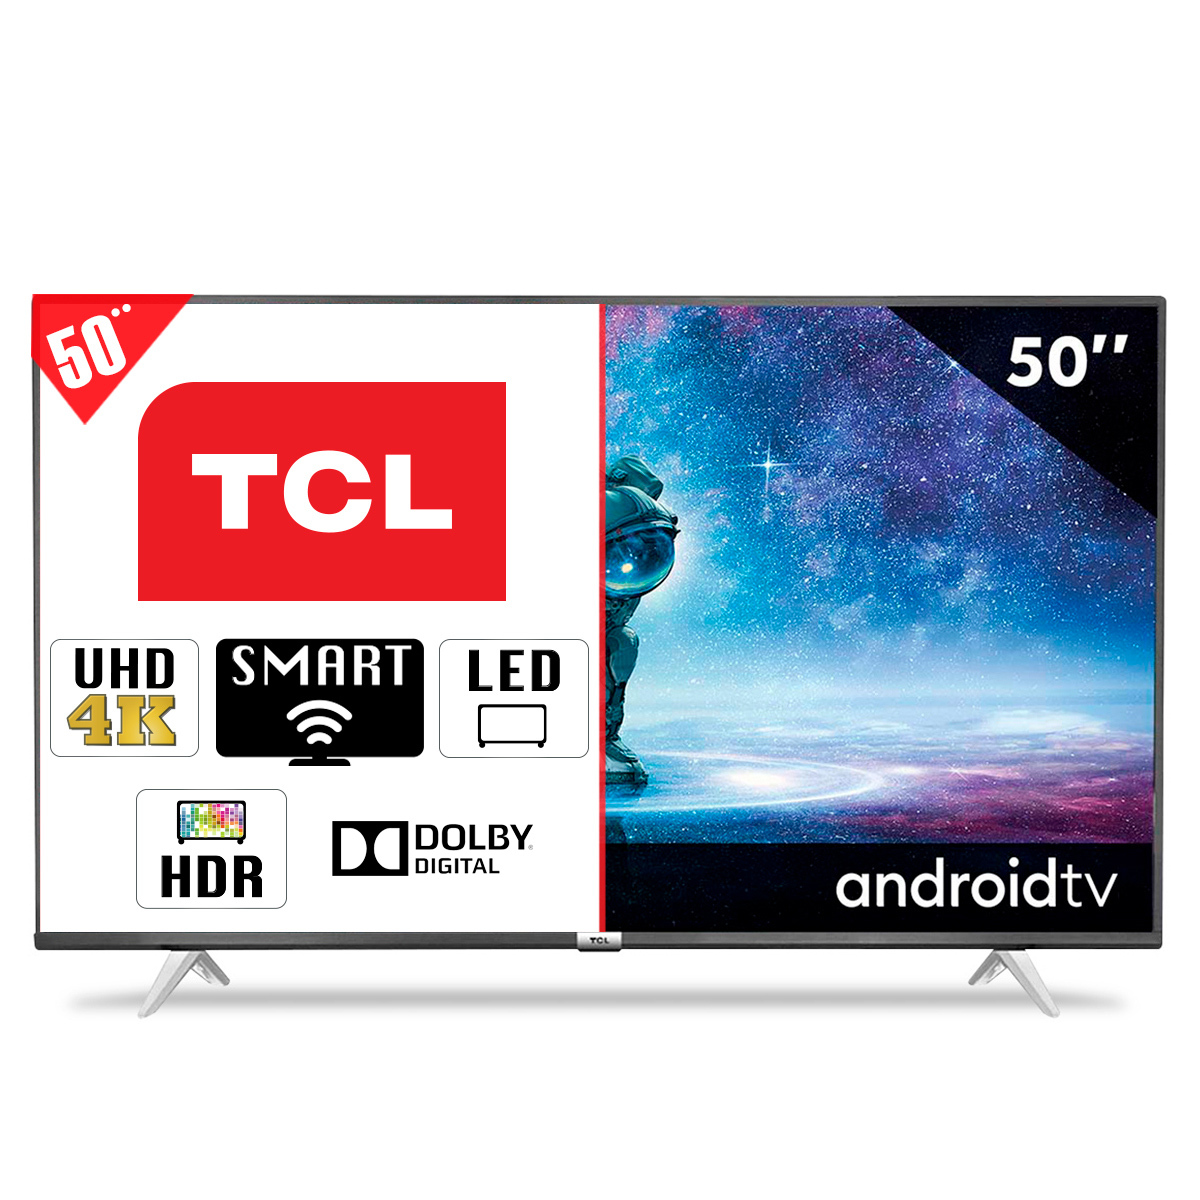 Pantalla TV TCL 50A445 / 4K Ultra HD / 50 Pulg. / Smart TV / Led / Bluetooth / Dolby Digital / HDMI / USB